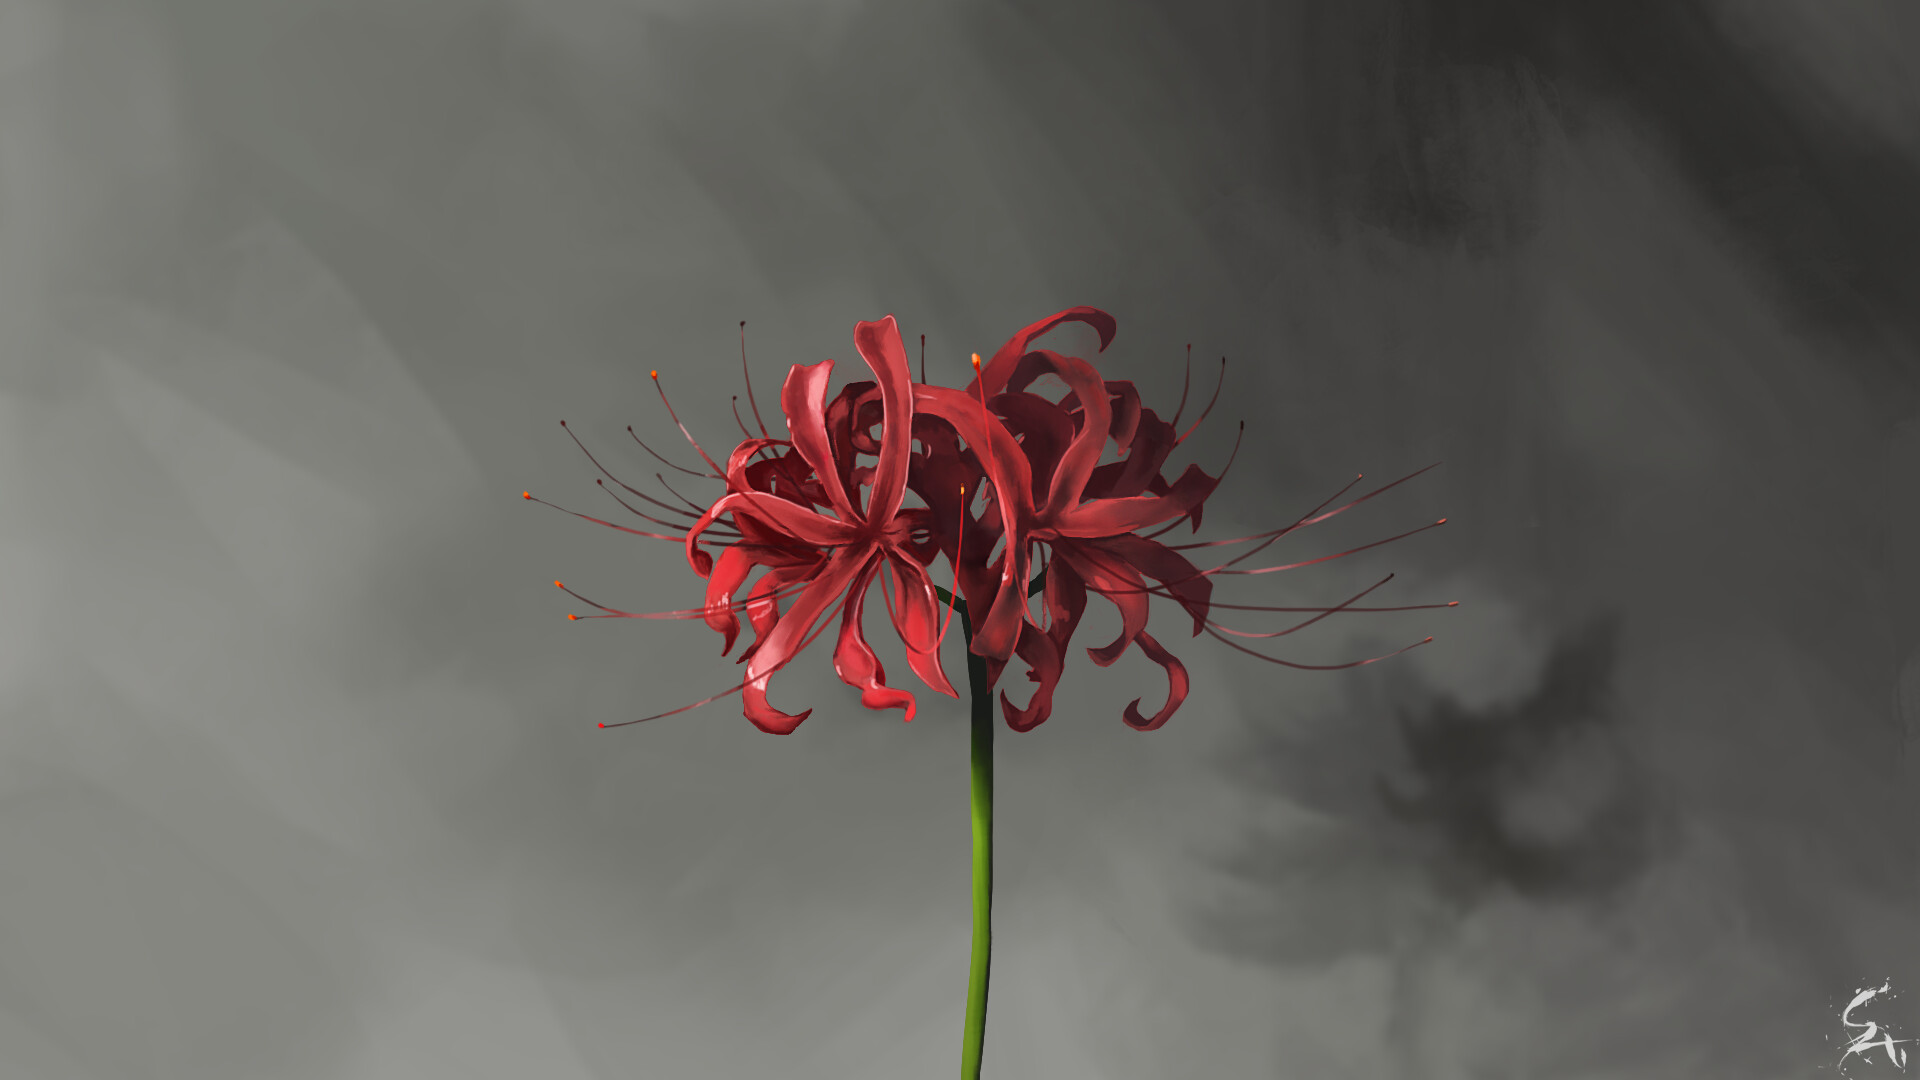 ArtStation - The Red Spider Lily, Vivek